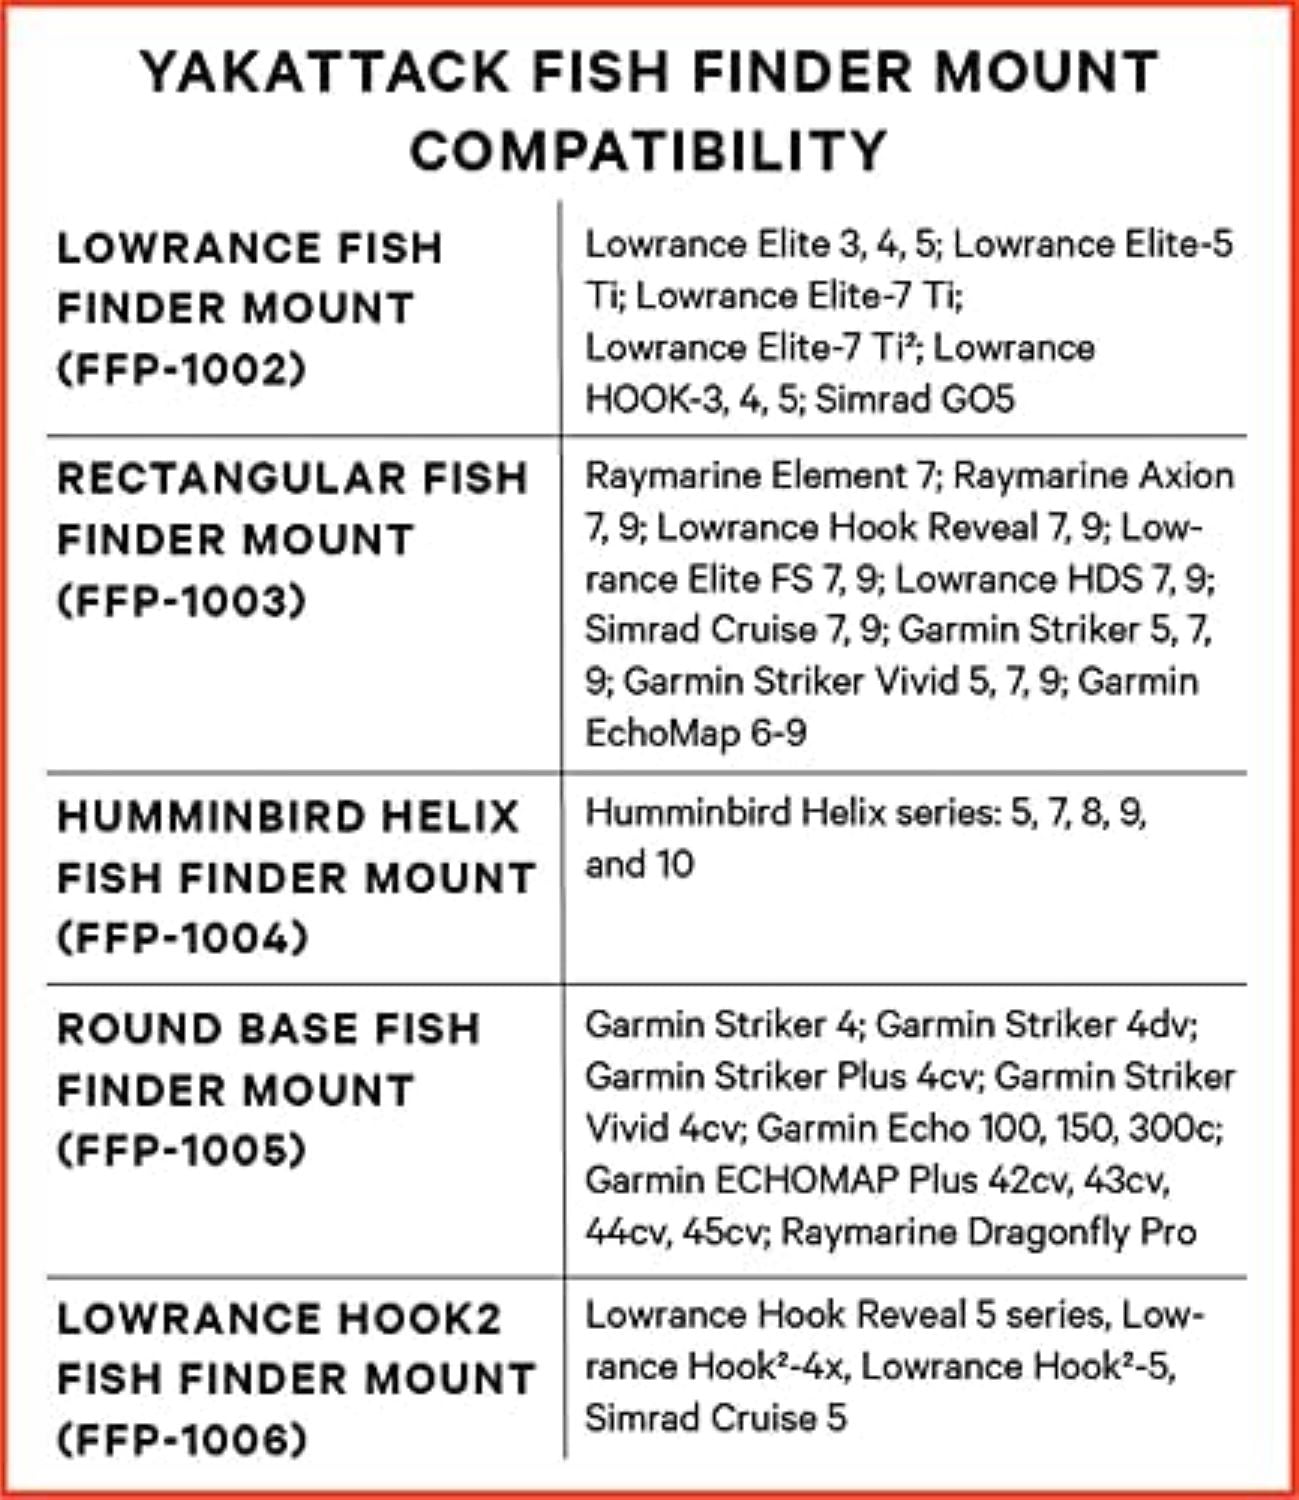 YakAttack Lowrance Hook 2, 4 and 5 Fish Finder Mount, Black - FFP